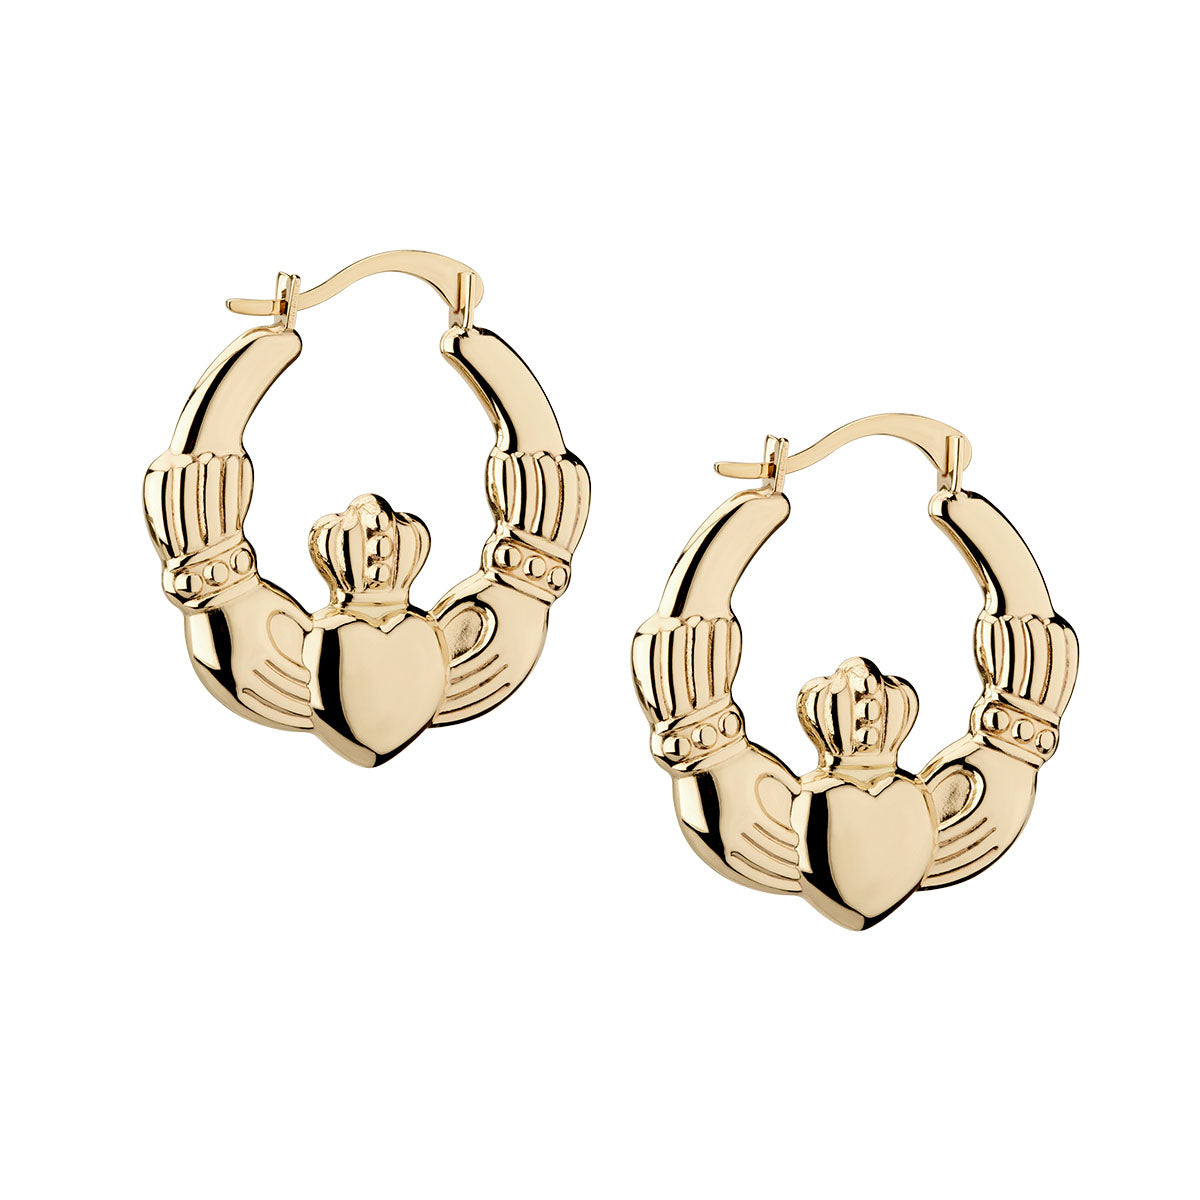 14K gold claddagh creole earrings s3056 from Solvar